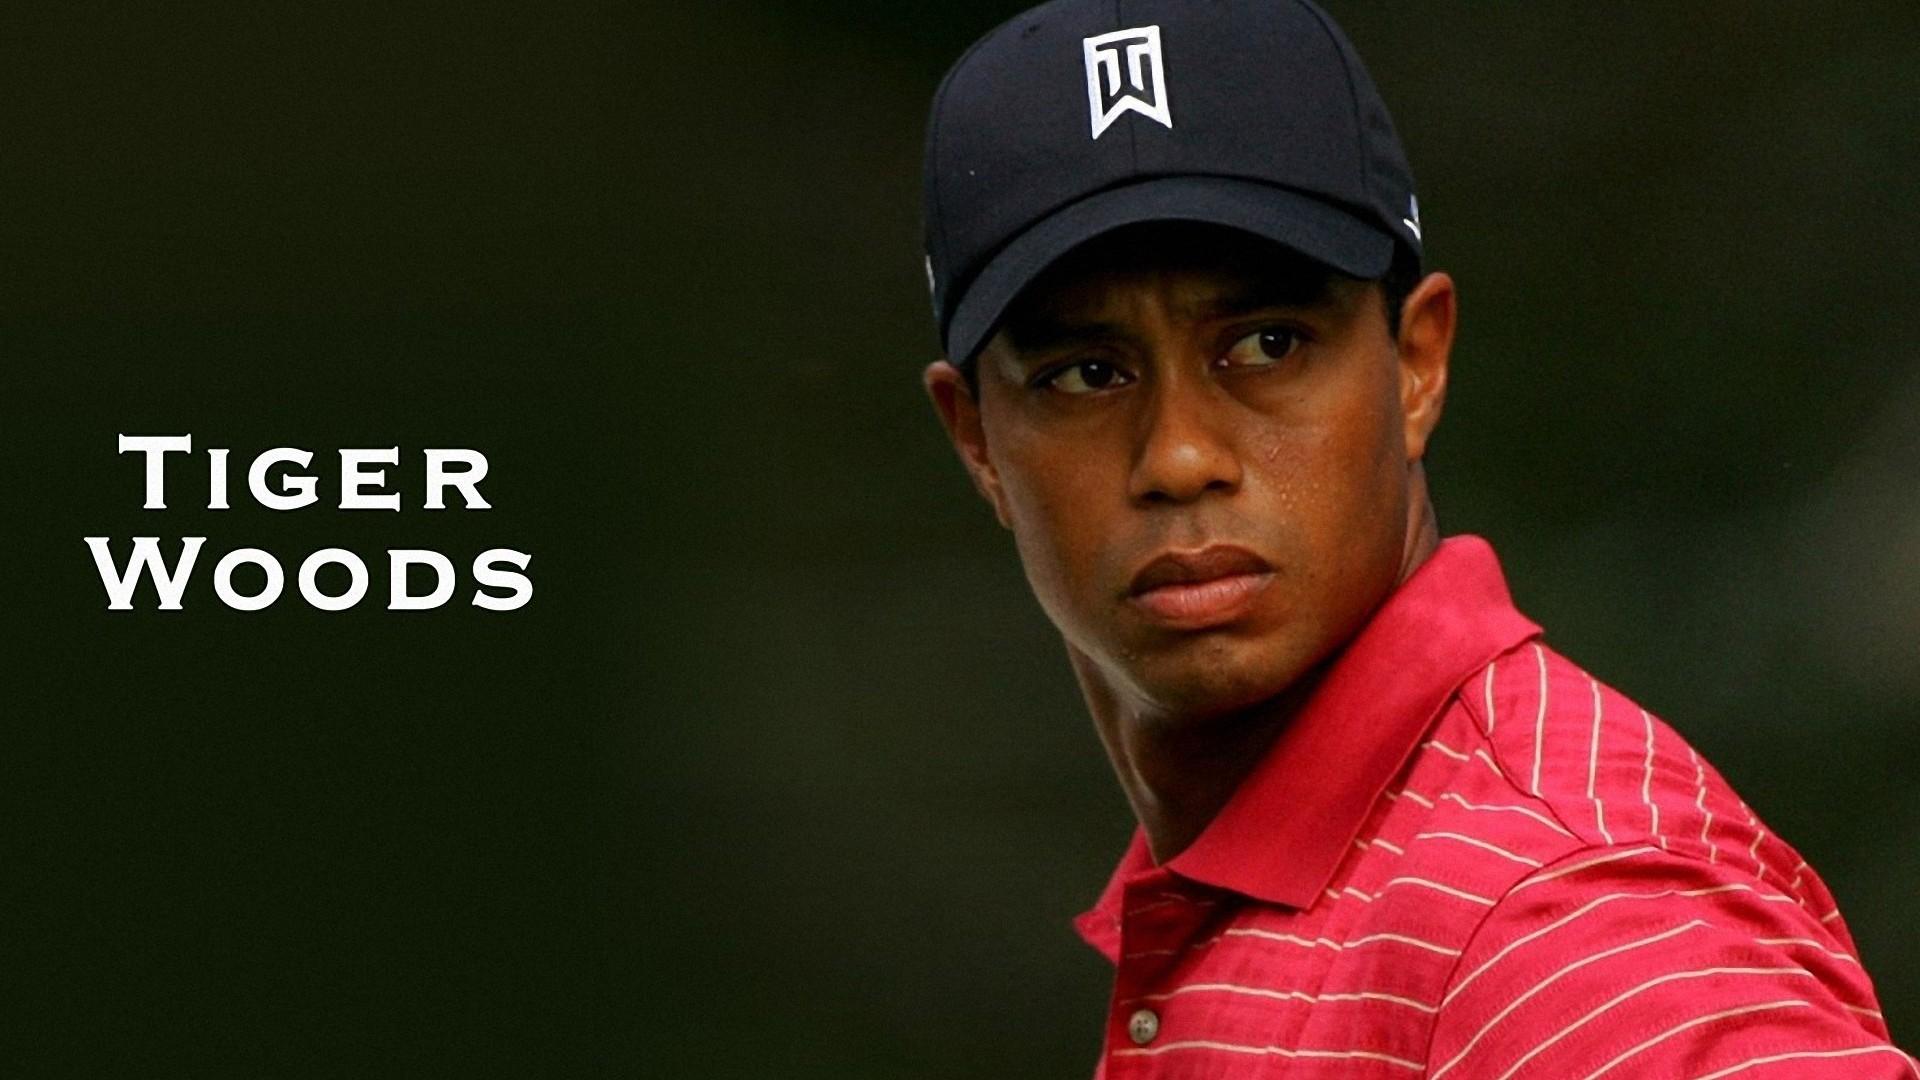 Tiger Woods Wallpaper Hd Download